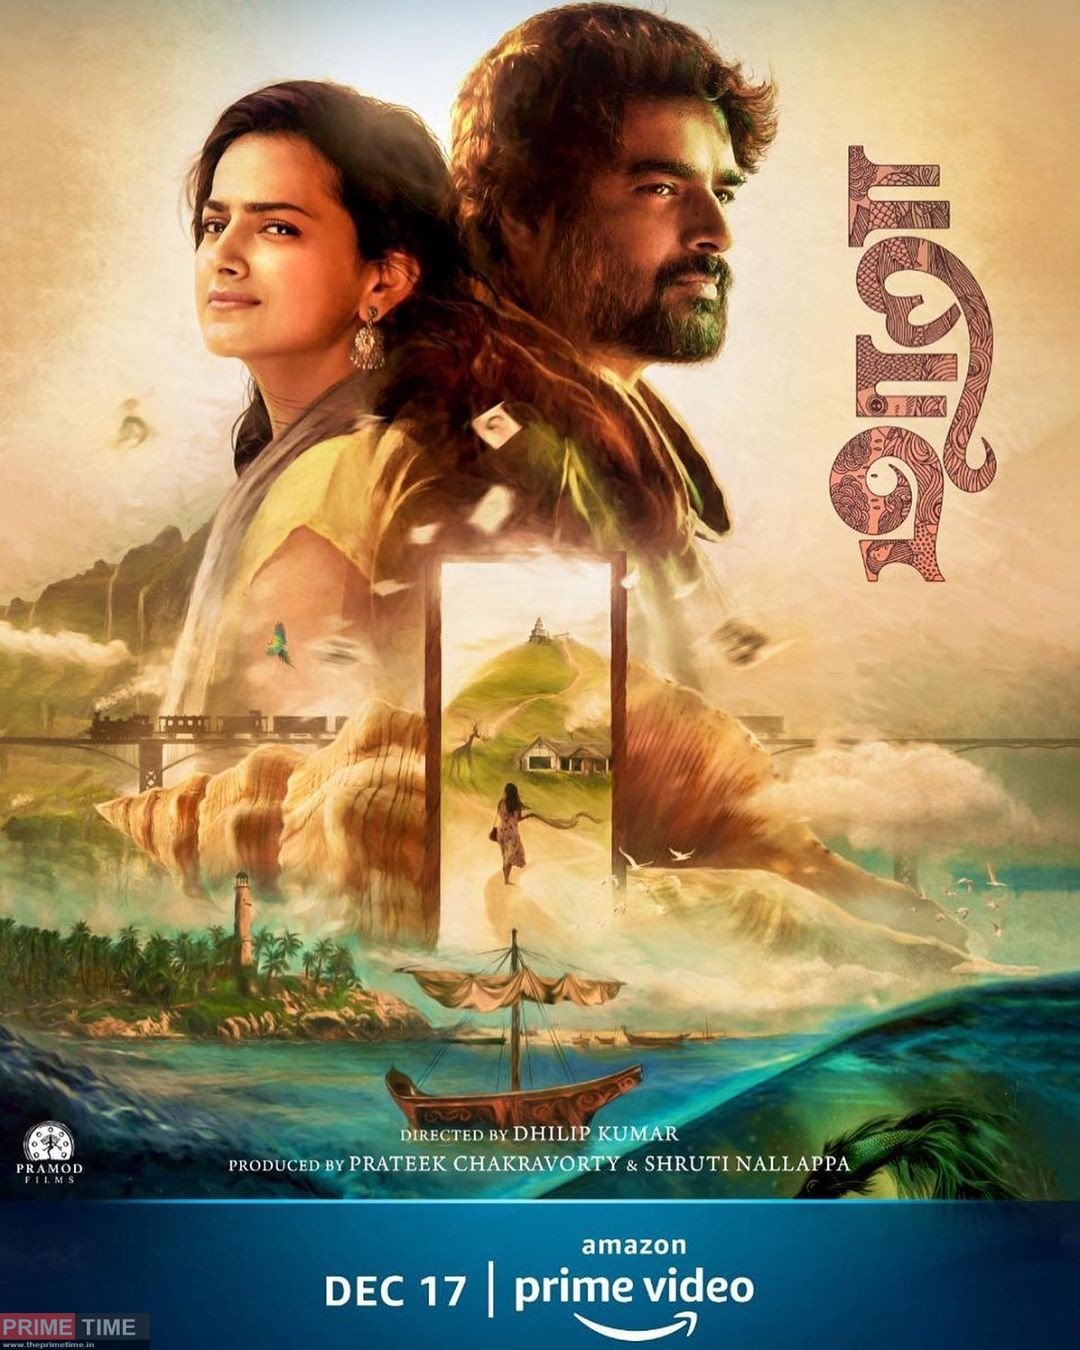 Blockbuster movie Charlie's Tamil remake 'Maara' on Amazon Prime in